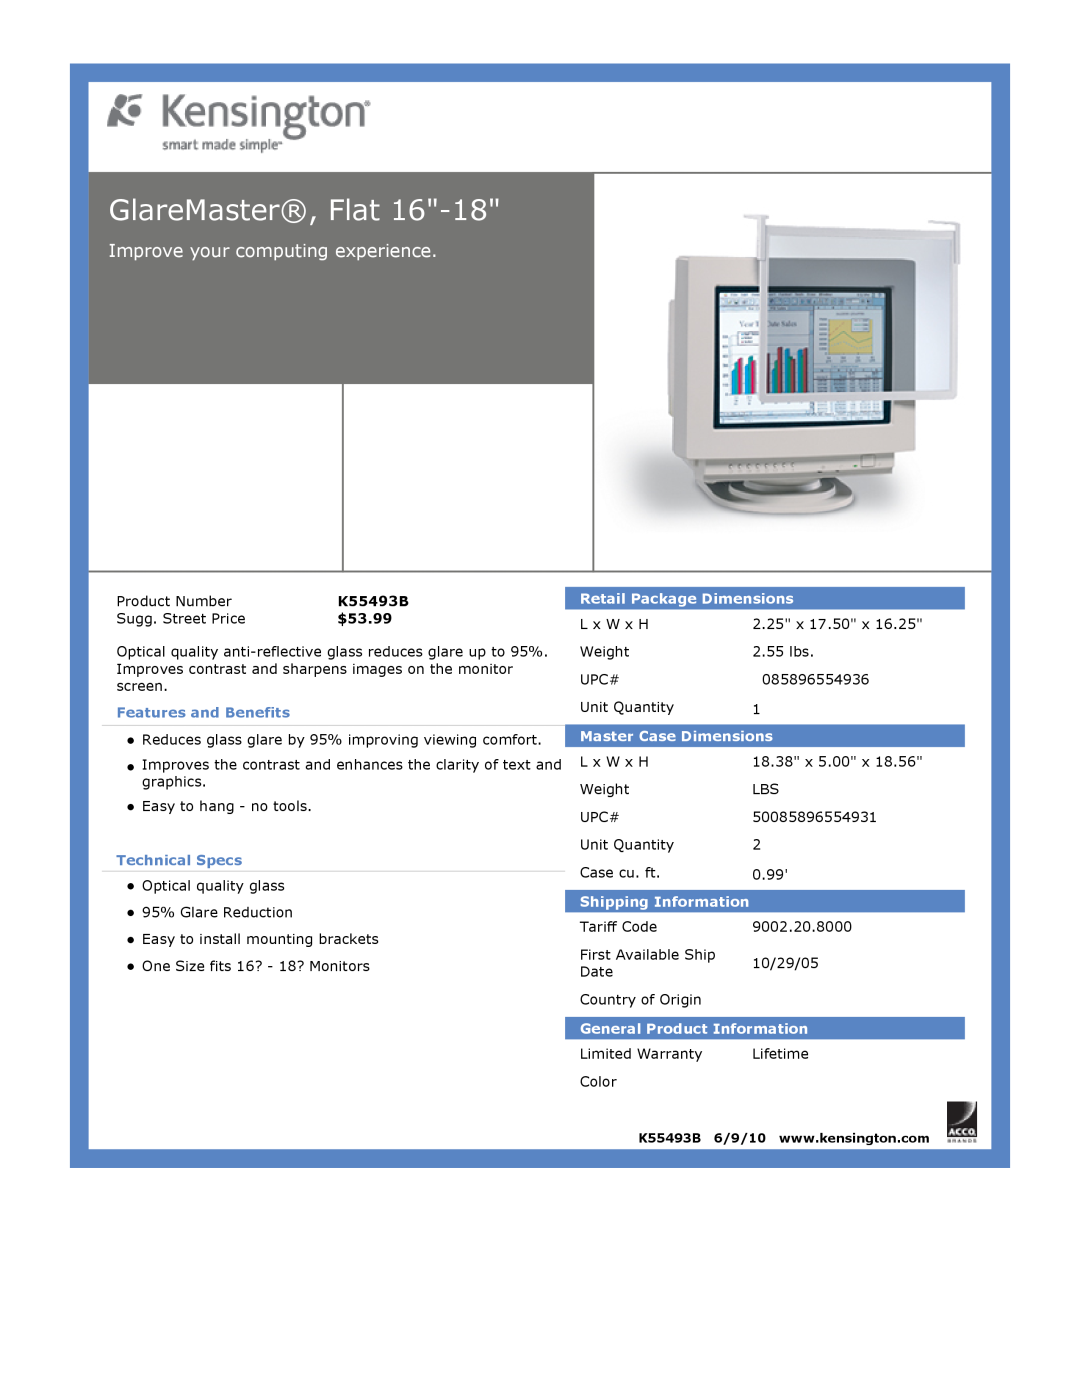 Kensington EU64325 GlareMaster, Flat, Improve your computing experience, $53.99, Features and Benefits, Technical Specs 